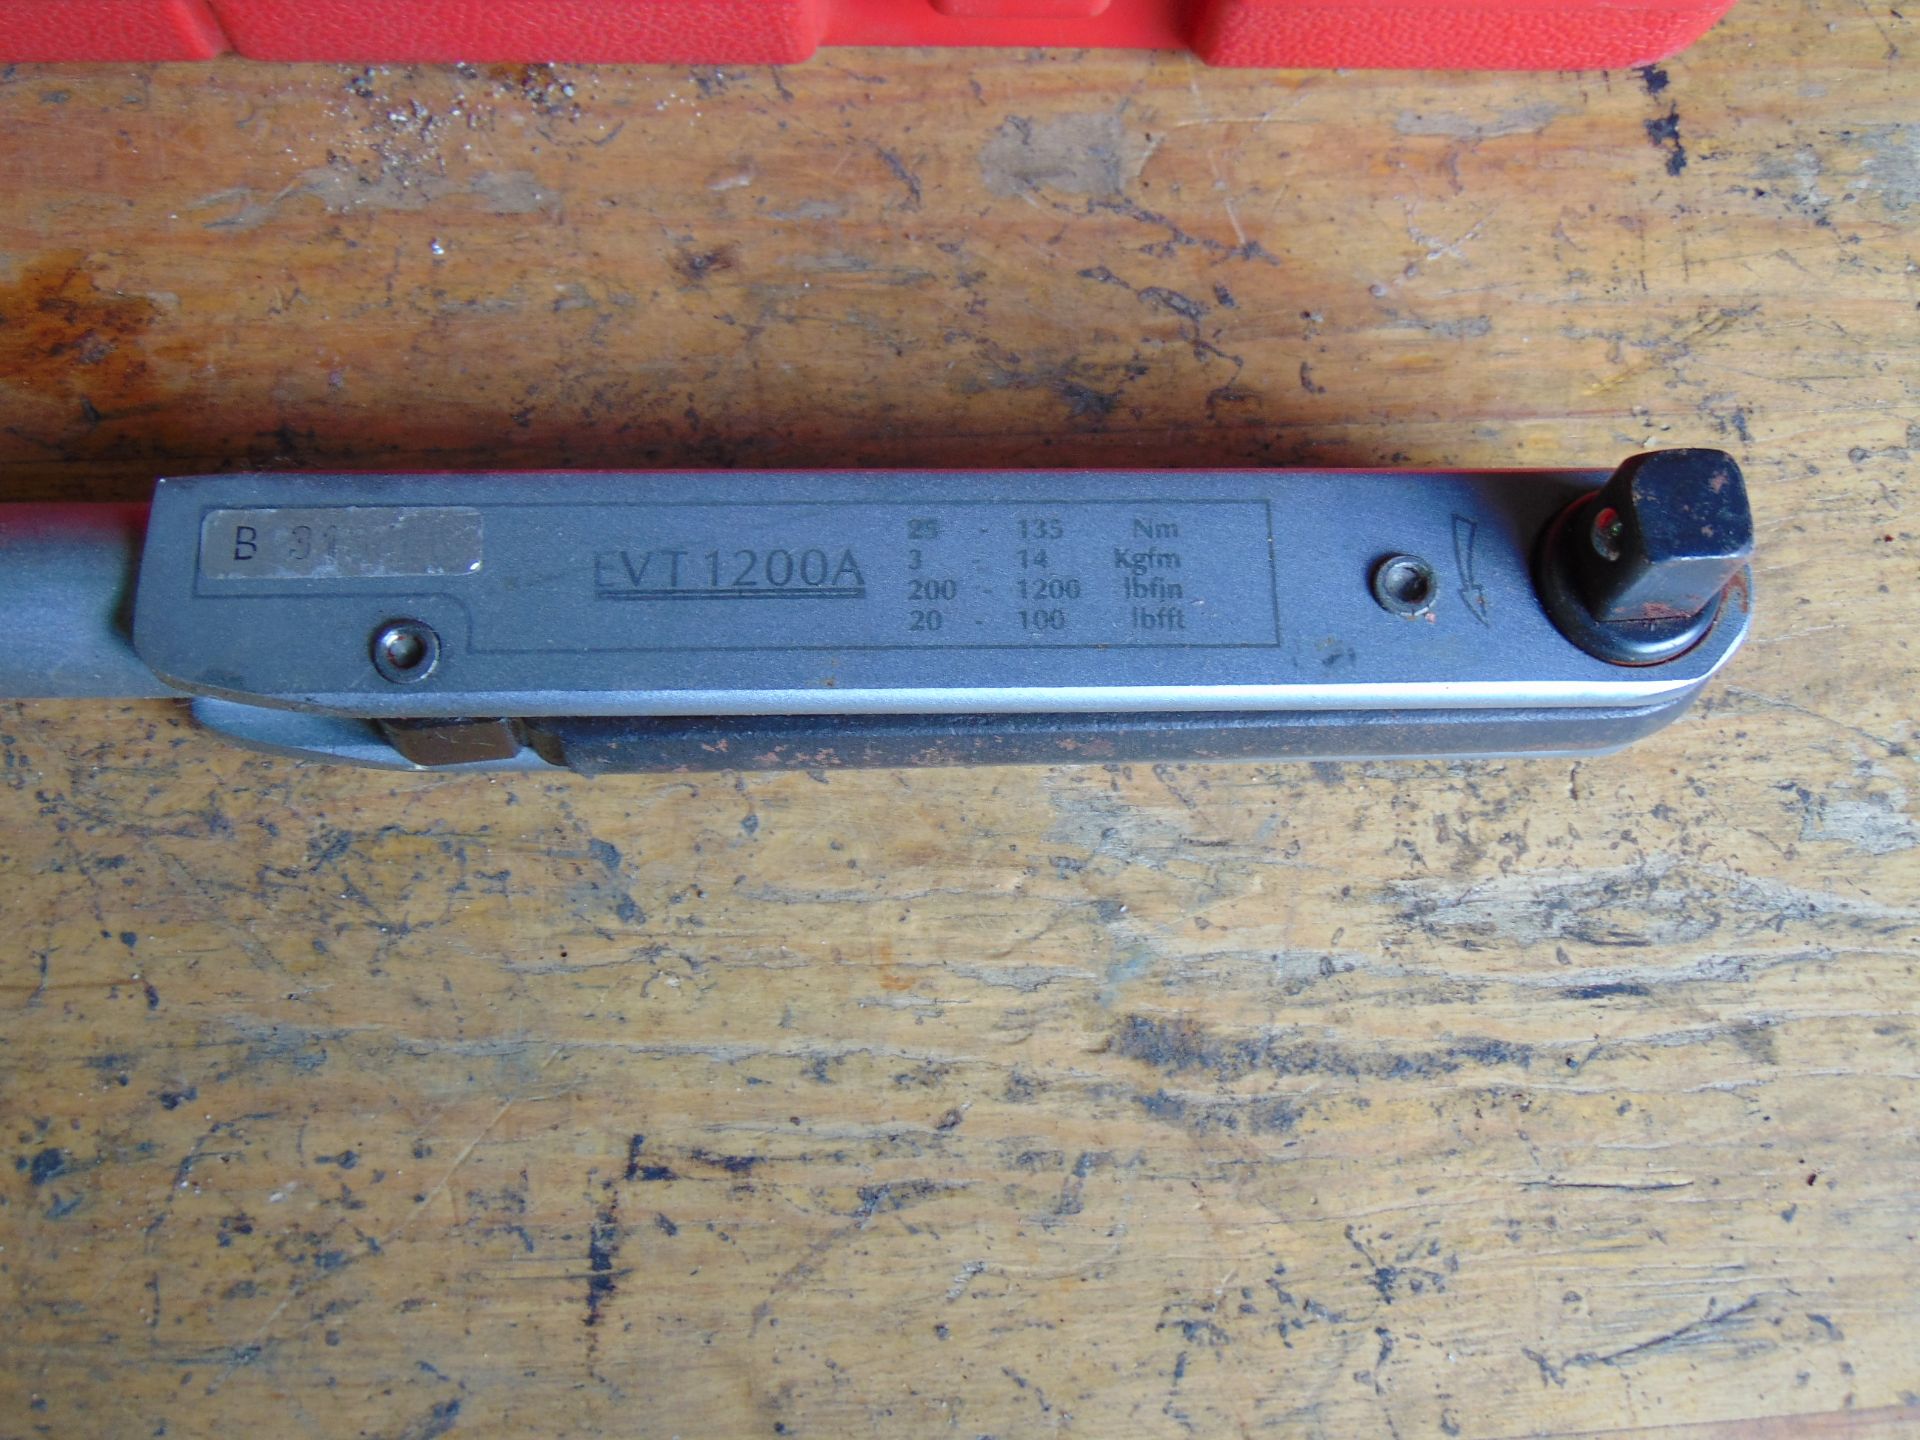 1 x Britool EVA 1200 A Torque Wrench in Case - Image 5 of 5